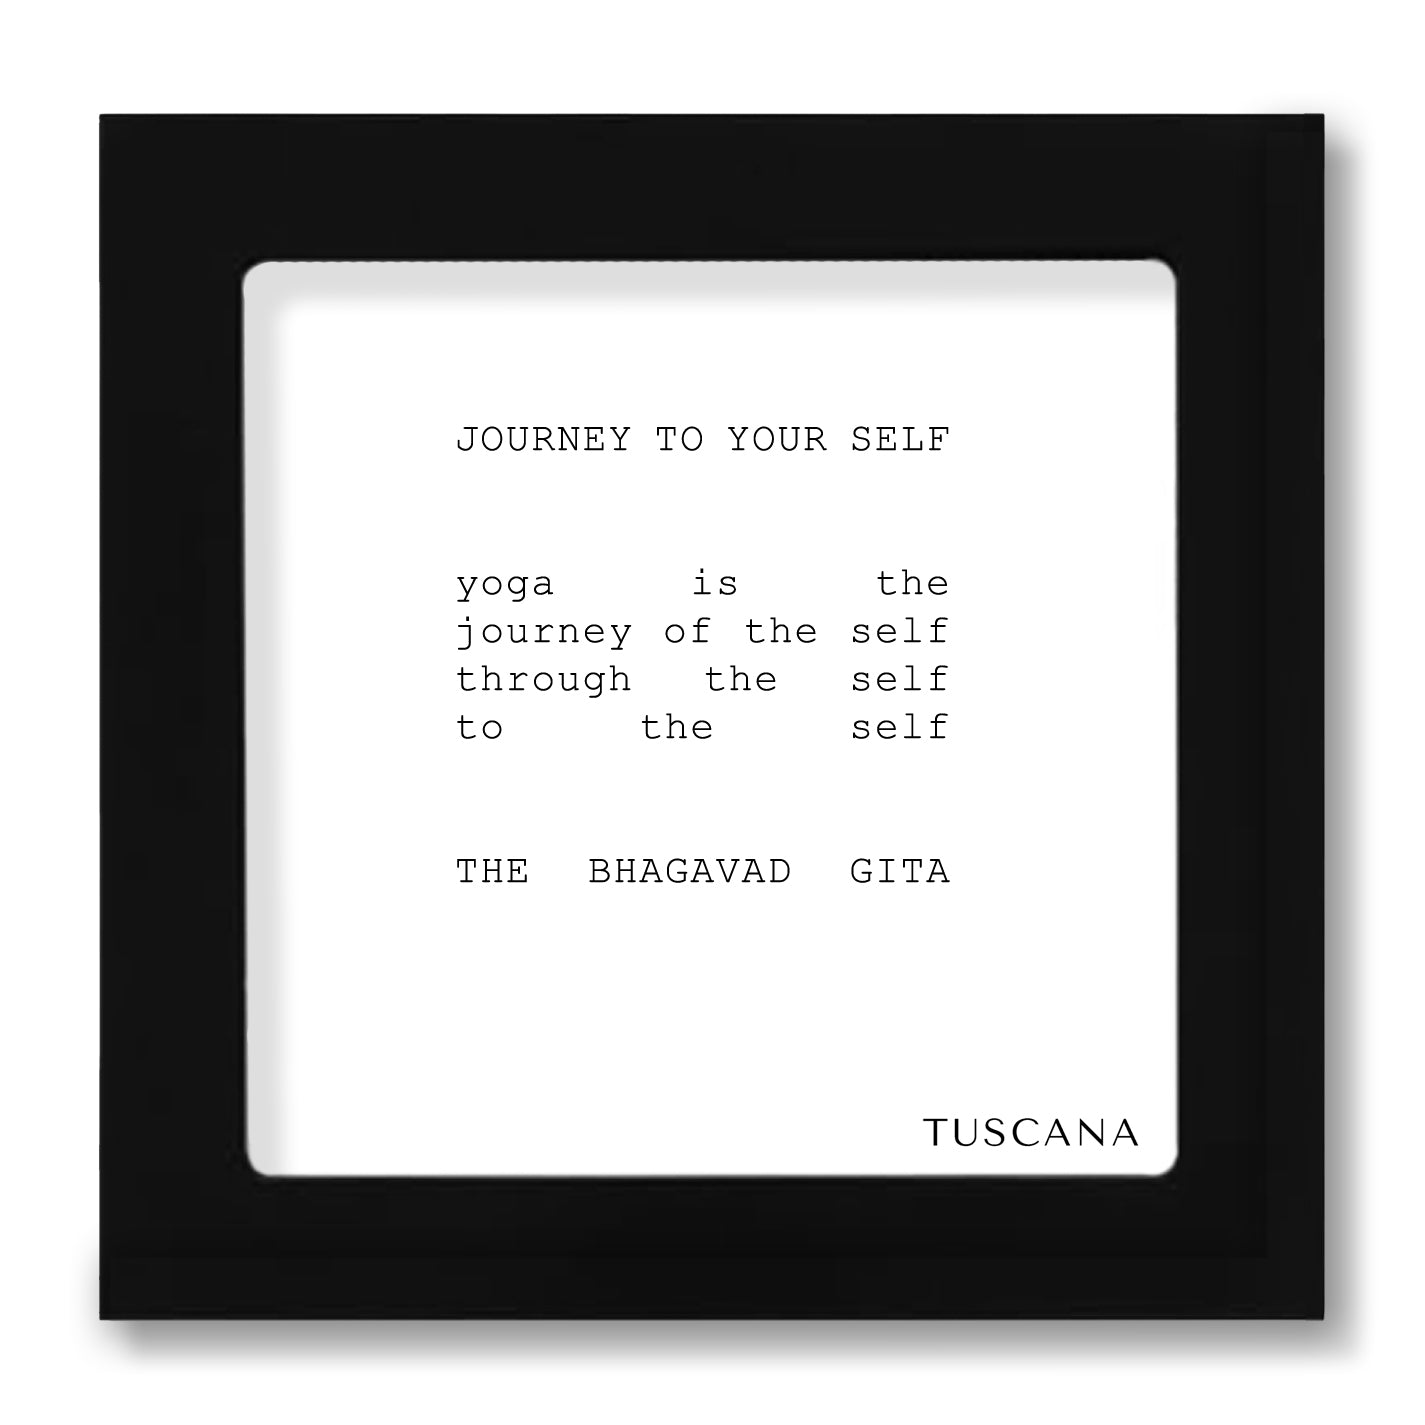 "JOURNEY TO YOUR SELF" THE BHAGAVAD GITA